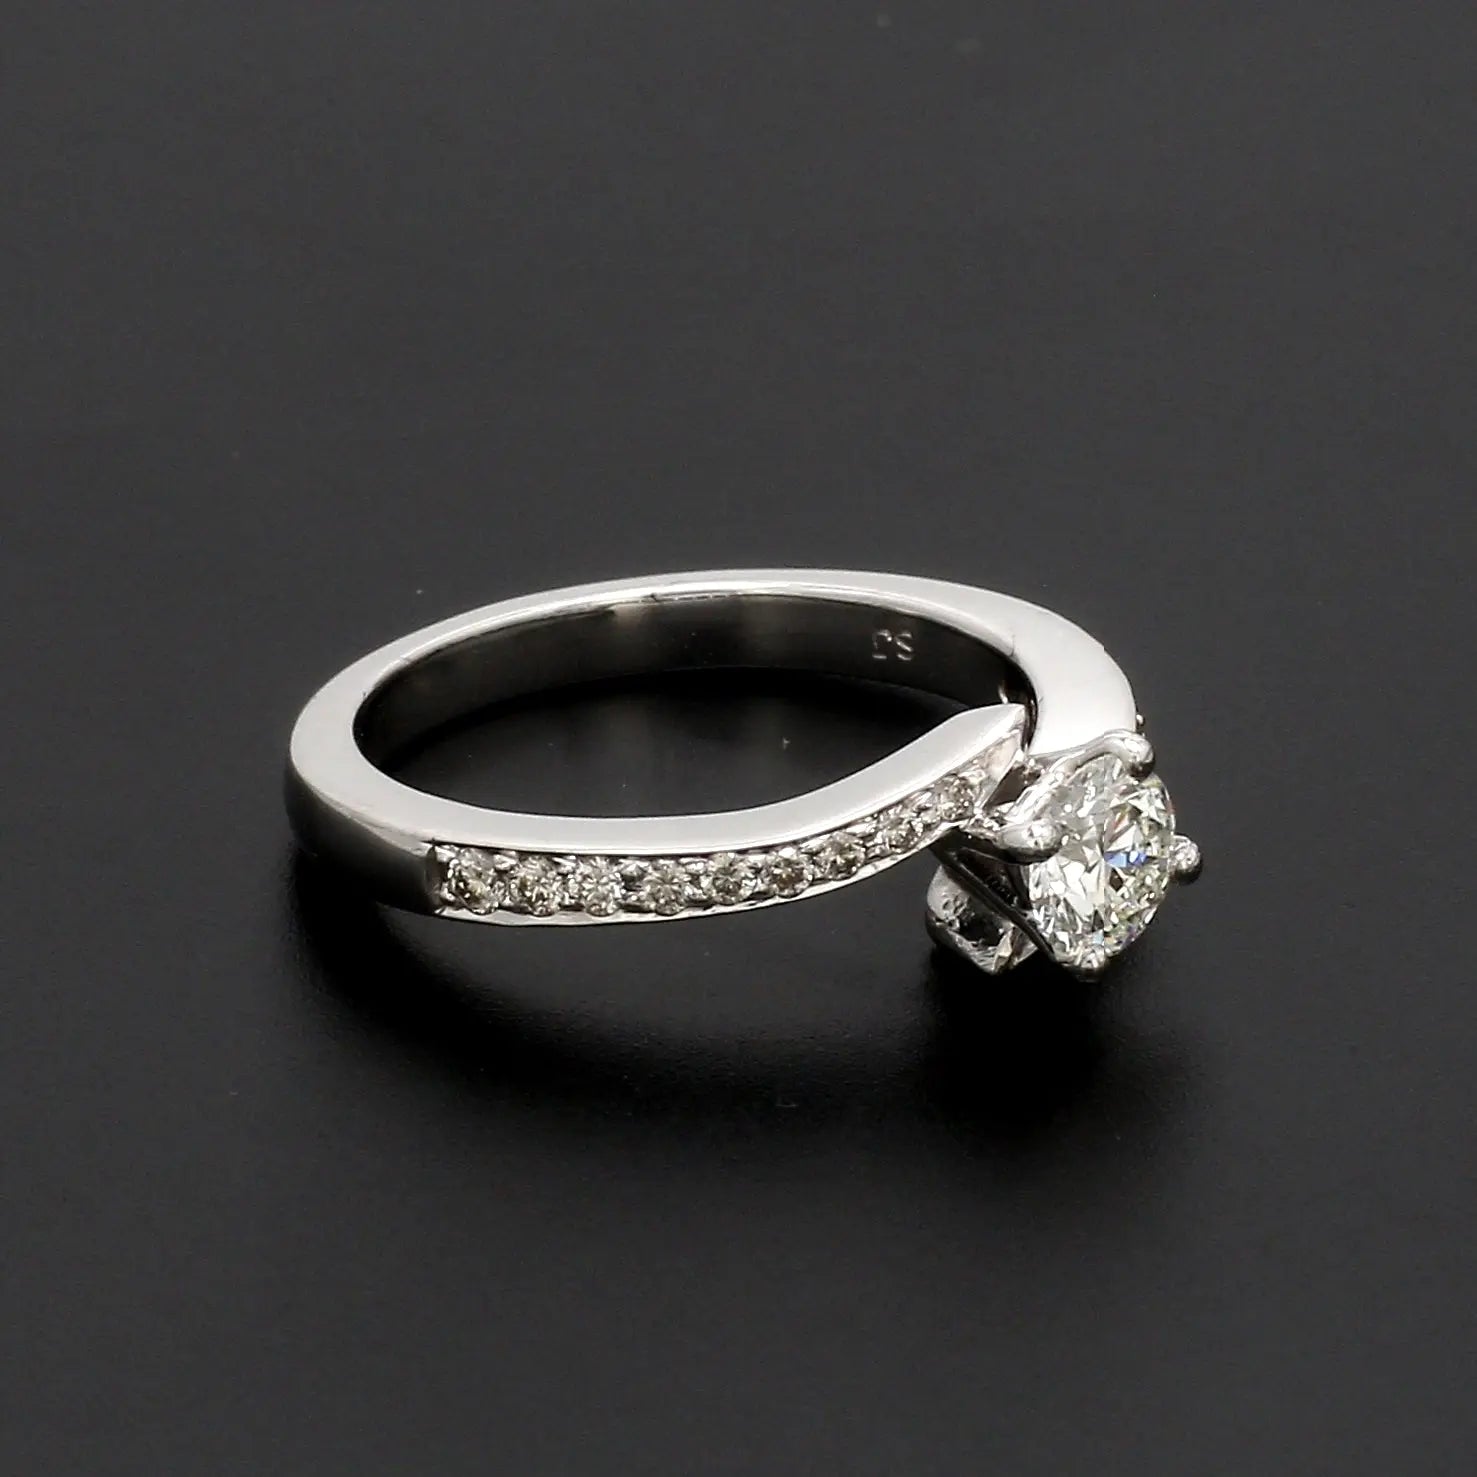 Designer Platinum Solitaire Engagement Ring with Curvy Shank with Diamonds JL PT 562   Jewelove.US